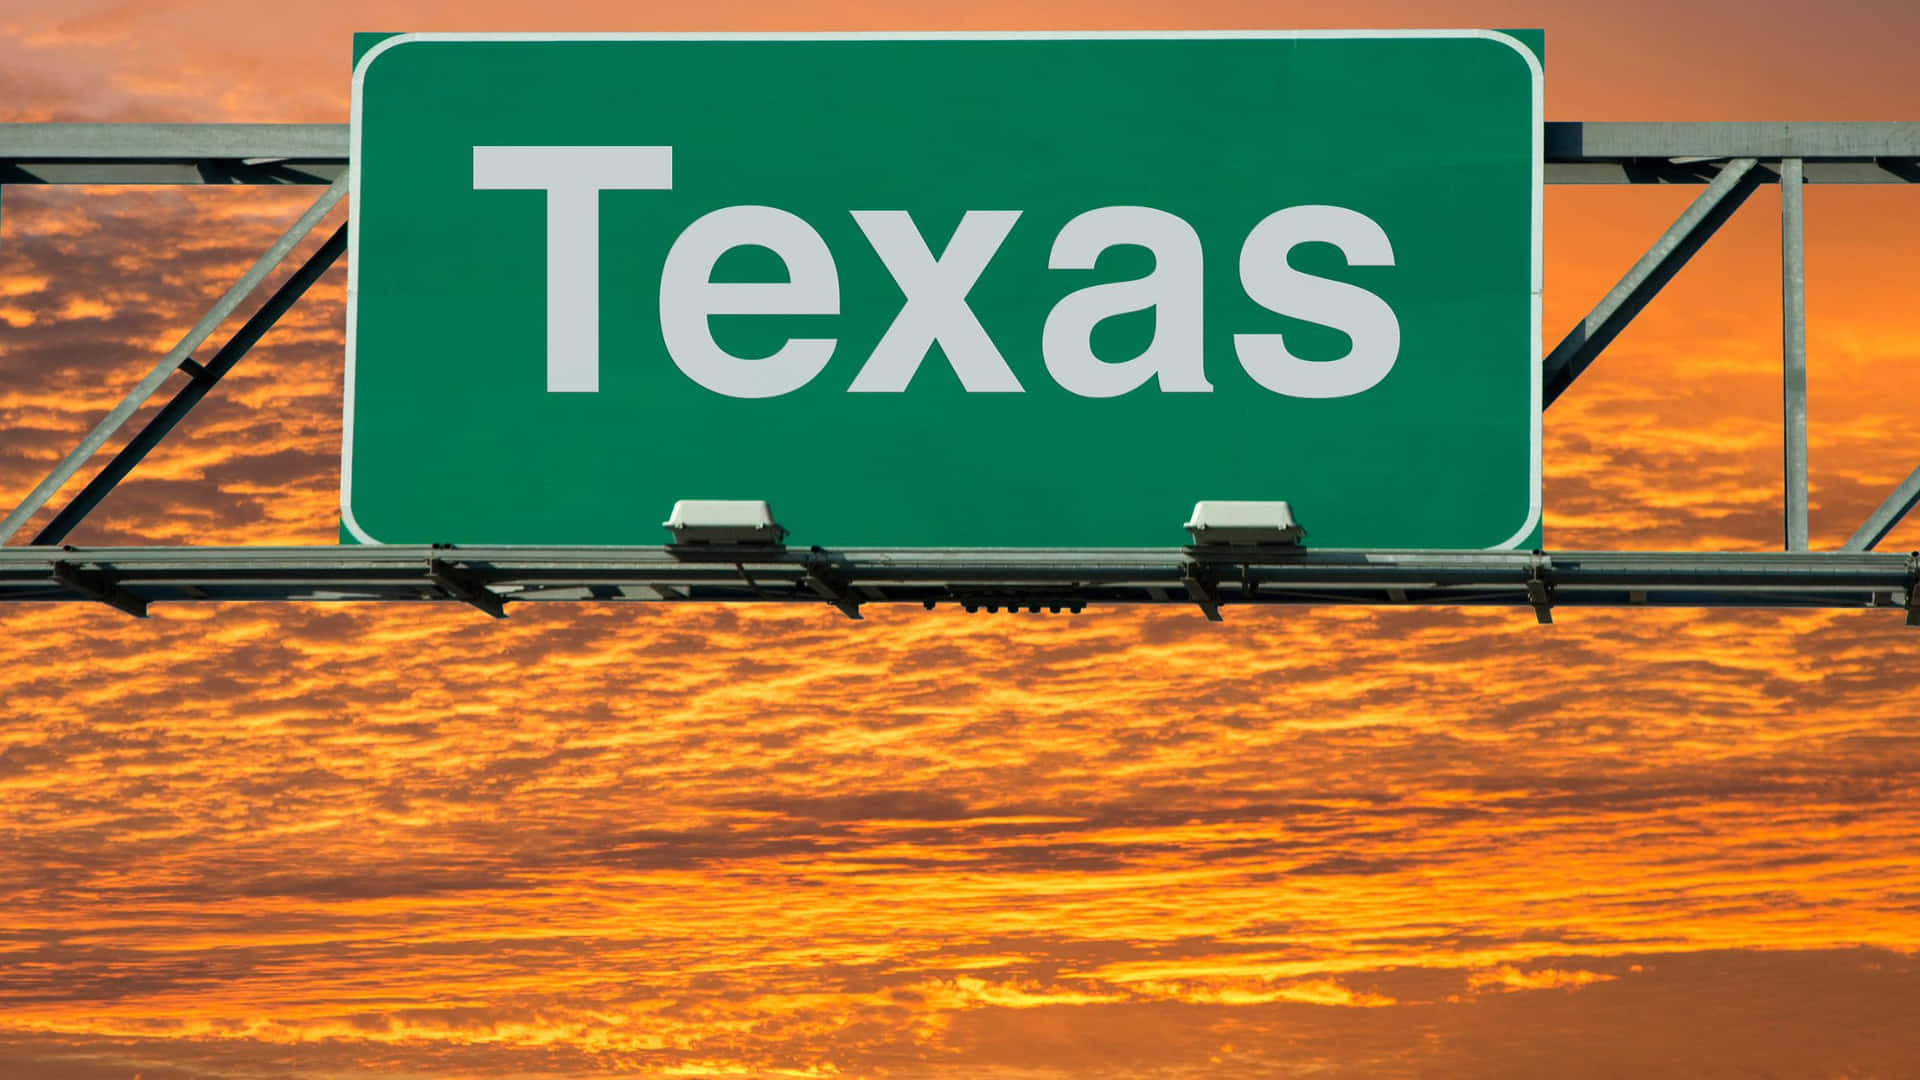 Etgrønt Skilt Med Texas På Det.